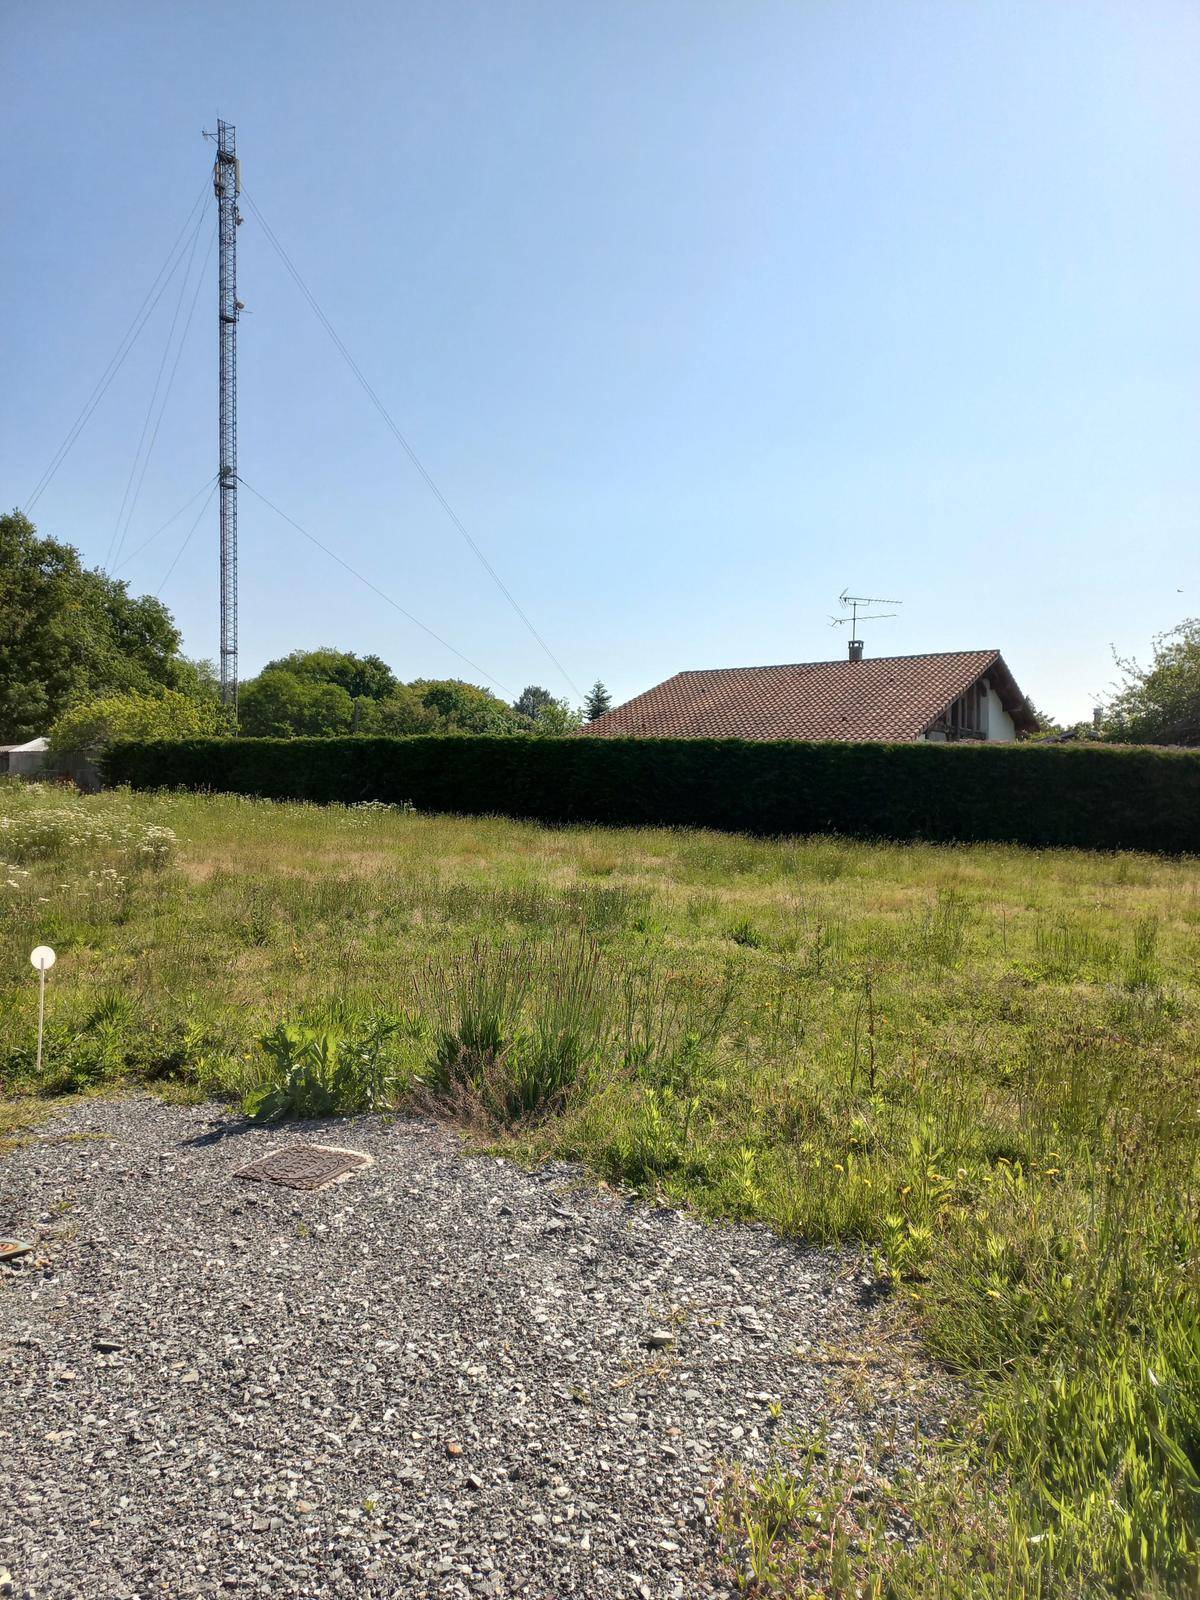 Terrain seul à Arsac en Gironde (33) de 665 m² à vendre au prix de 183000€